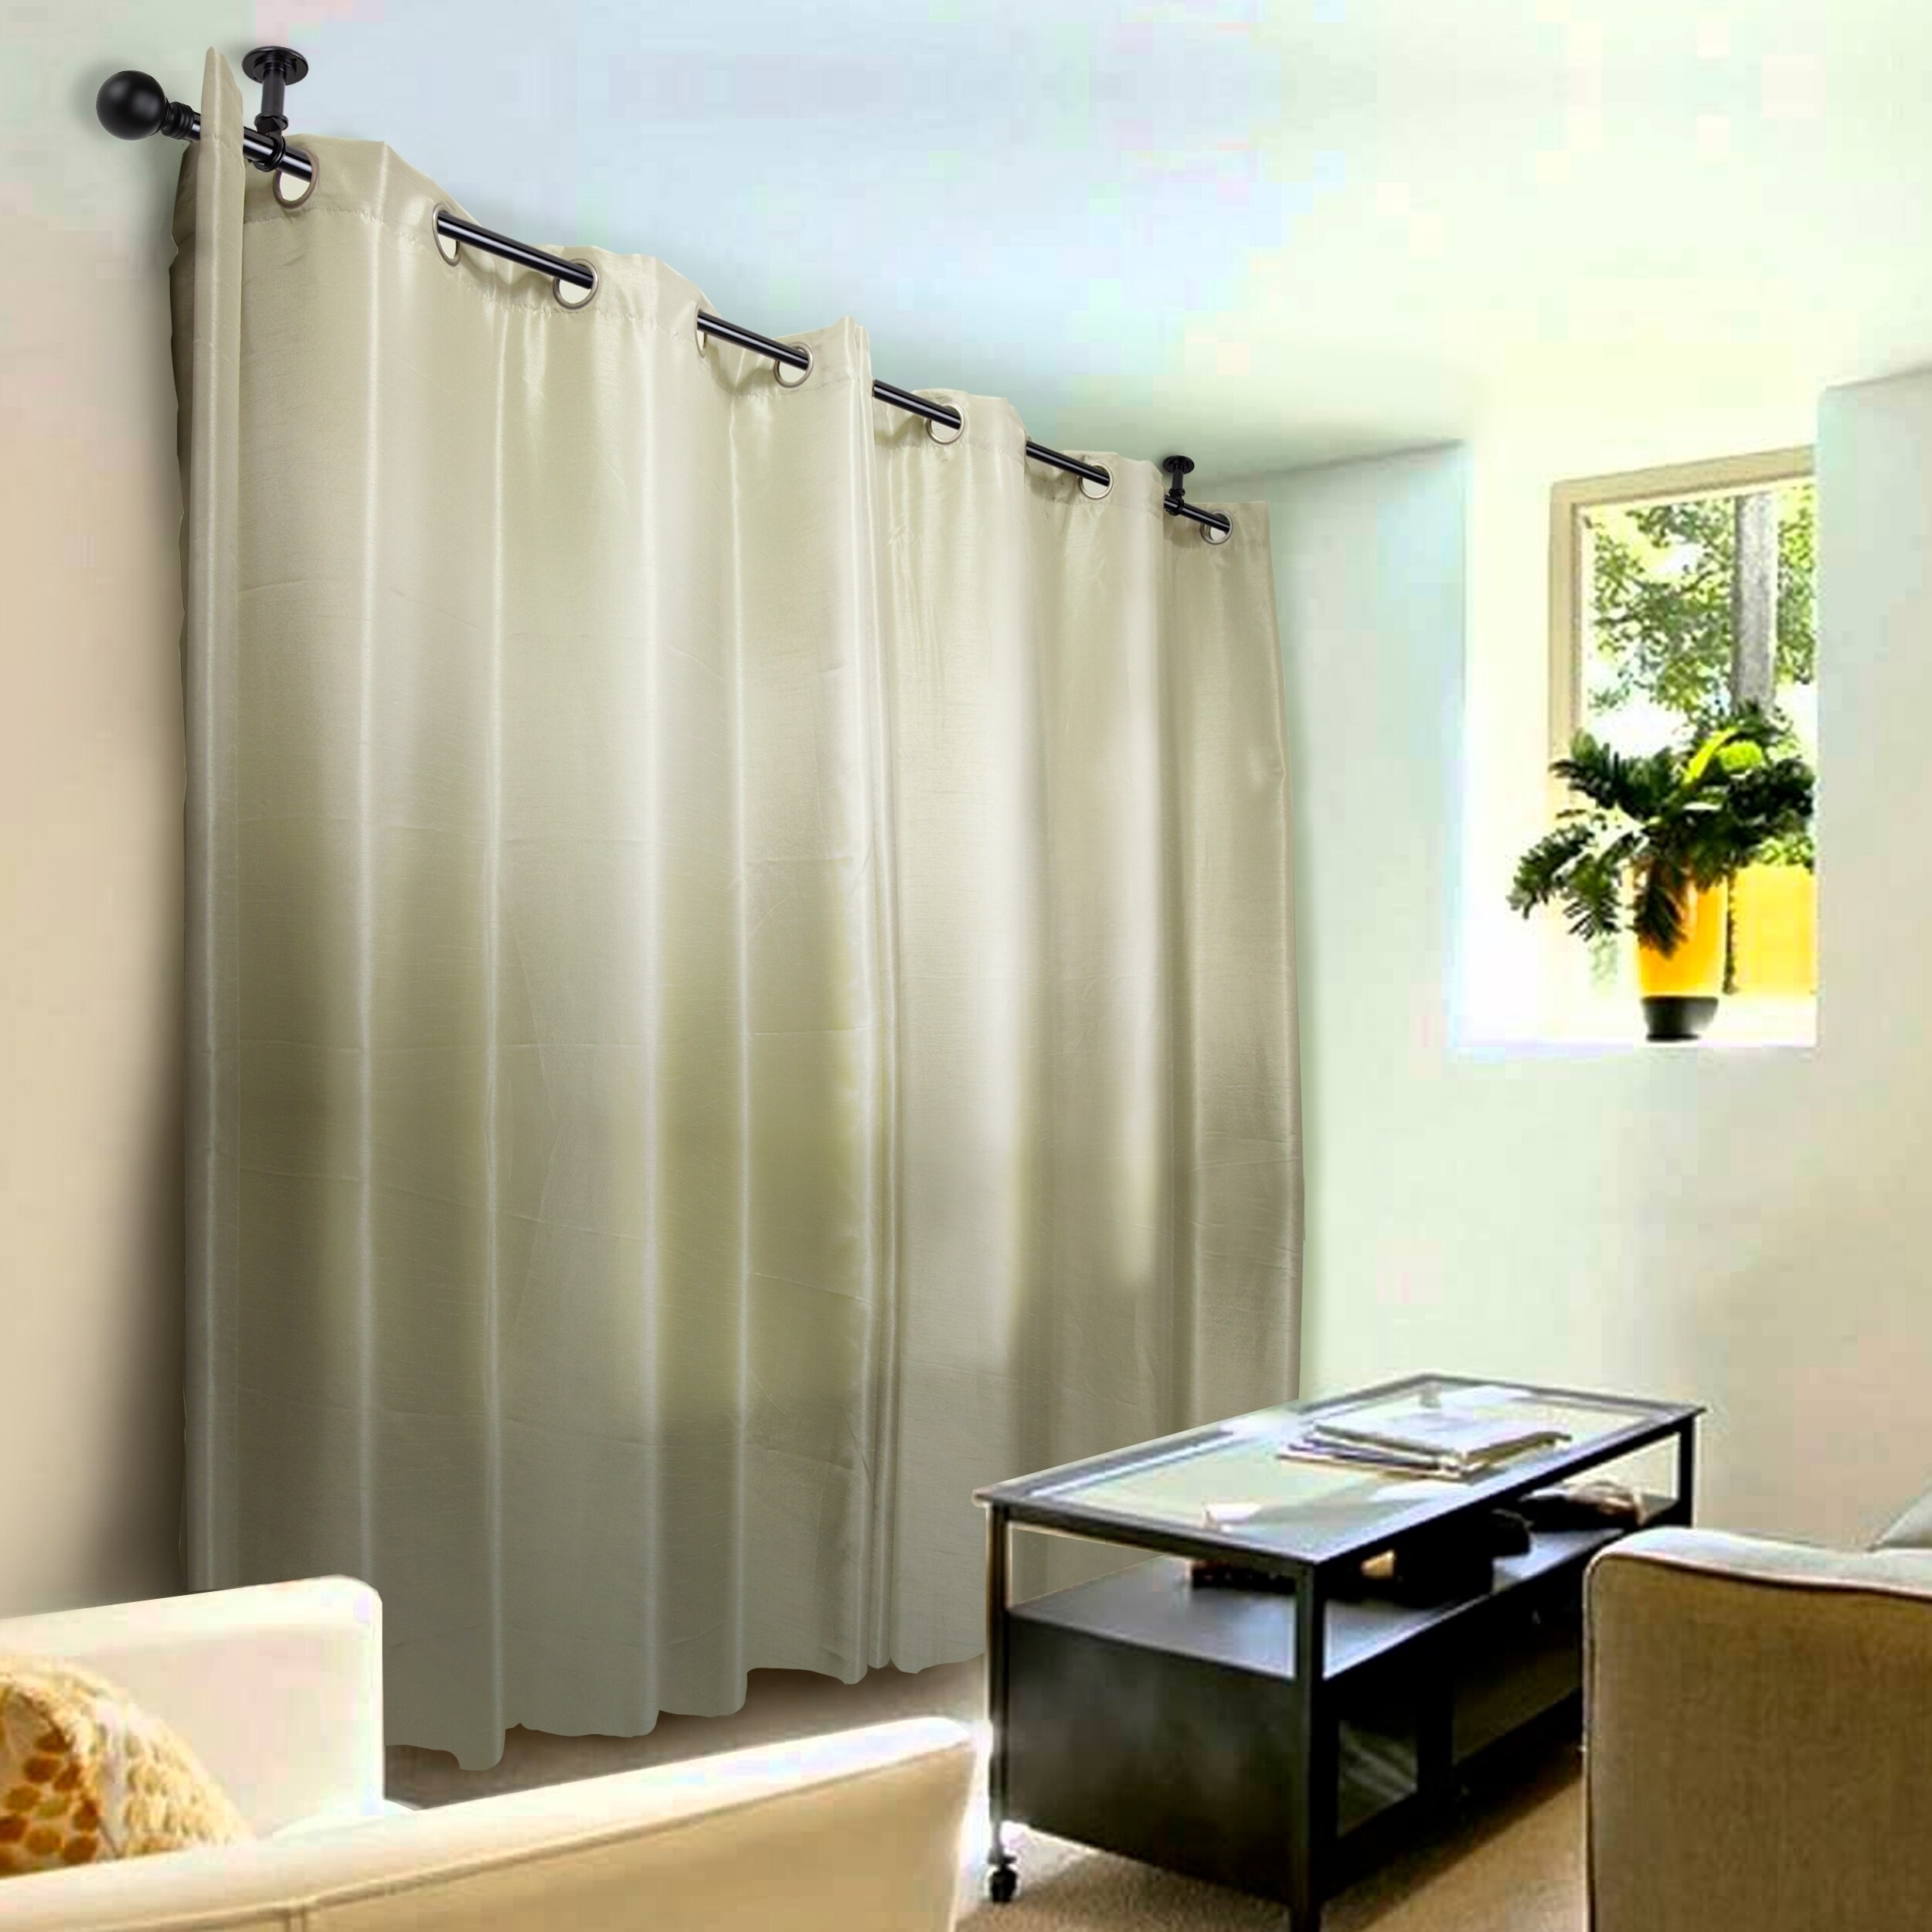 Instyledesign Pellet 1 Inch Diameter Ceiling Curtain Rod Room Divider